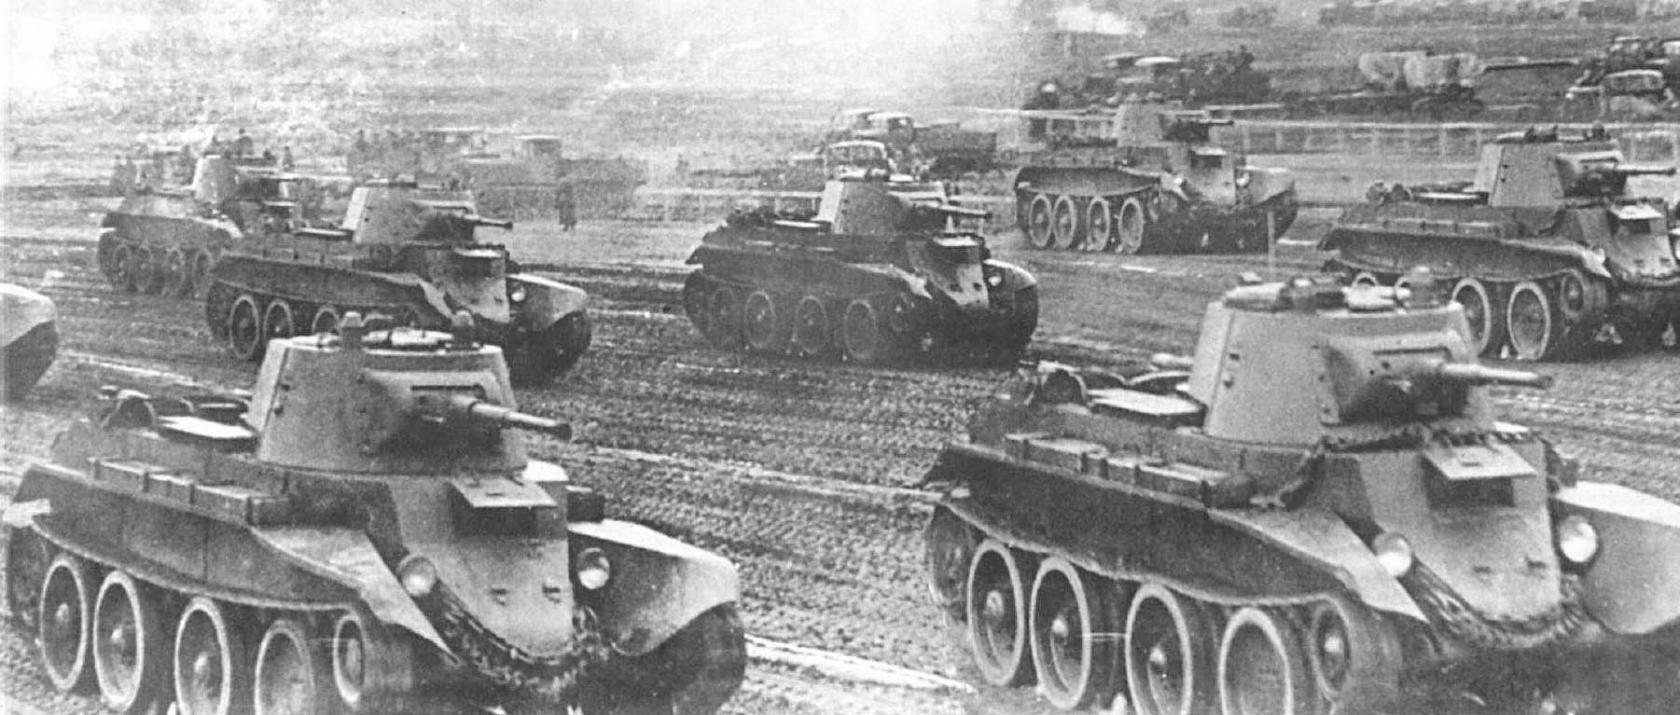 23 июня 1941 г. Битва под Дубно 1941 танковая. БТ-7 1941. Дубно-Луцк-Броды в 1941. Луцк Броды Дубно танковое сражение.